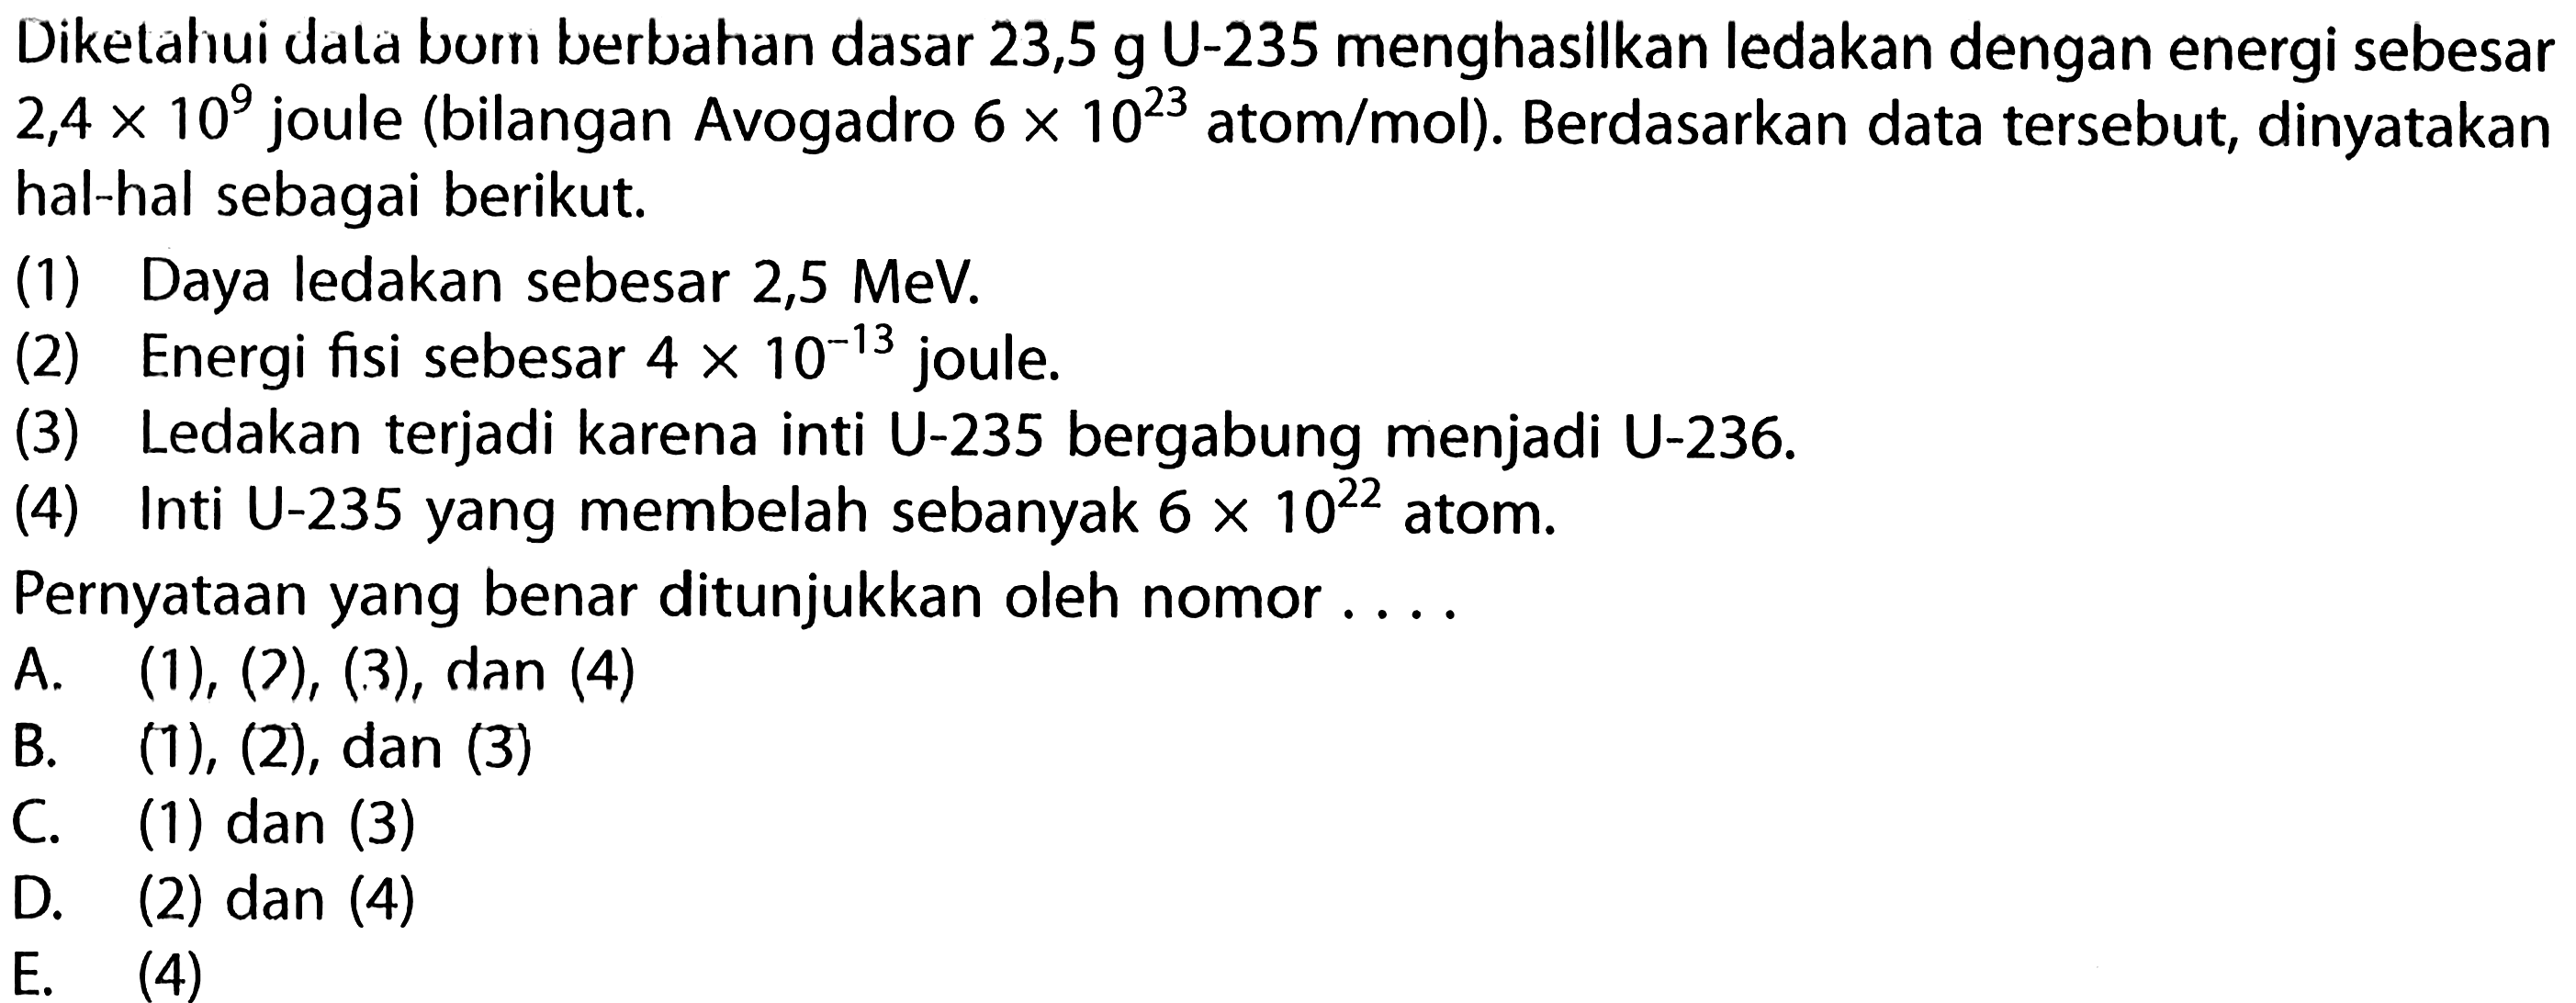 Diketahui data bom berbahan dasar 23,5 g U-235 menghasilkan ledakan dengan energi sebesar 2,4 x 10^9 joule (bilangan Avogadro 6 x 10^23 atom/mol). Berdasarkan data tersebut, dinyatakan hal-hal sebagai berikut. 
(1) Daya ledakan sebesar 2,5 MeV. 
(2) Energi fisi sebesar 4 x 10^(-13) joule. 
(3) Ledakan terjadi karena inti U-235 bergabung menjadi U-236. 
(4) Inti U-235 yang membelah sebanyak 6 x 10^22 atom. 
Pernyataan yang benar ditunjukkan oleh nomor ....